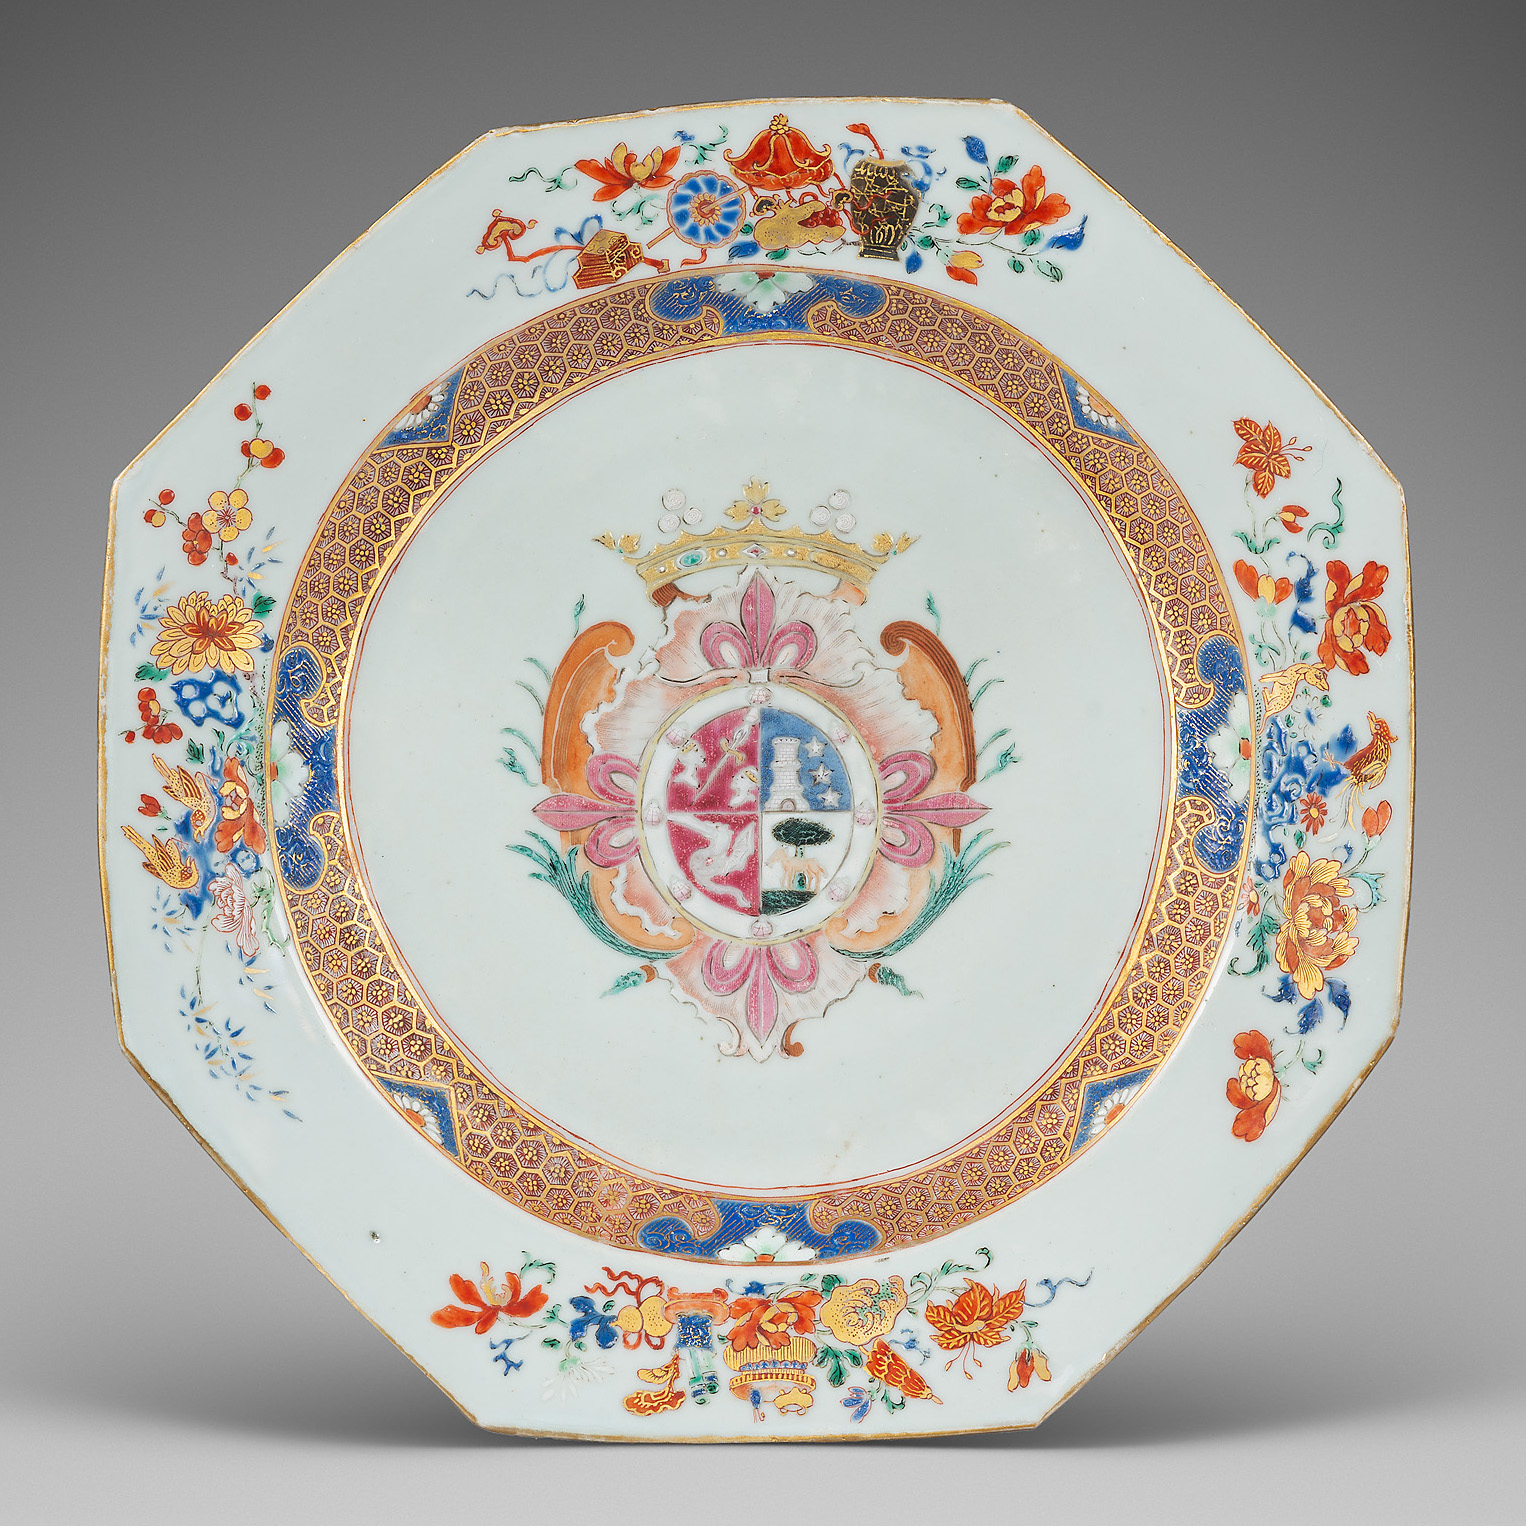 Porcelaine Qianlong (1735-1795), circa 1743, Chine